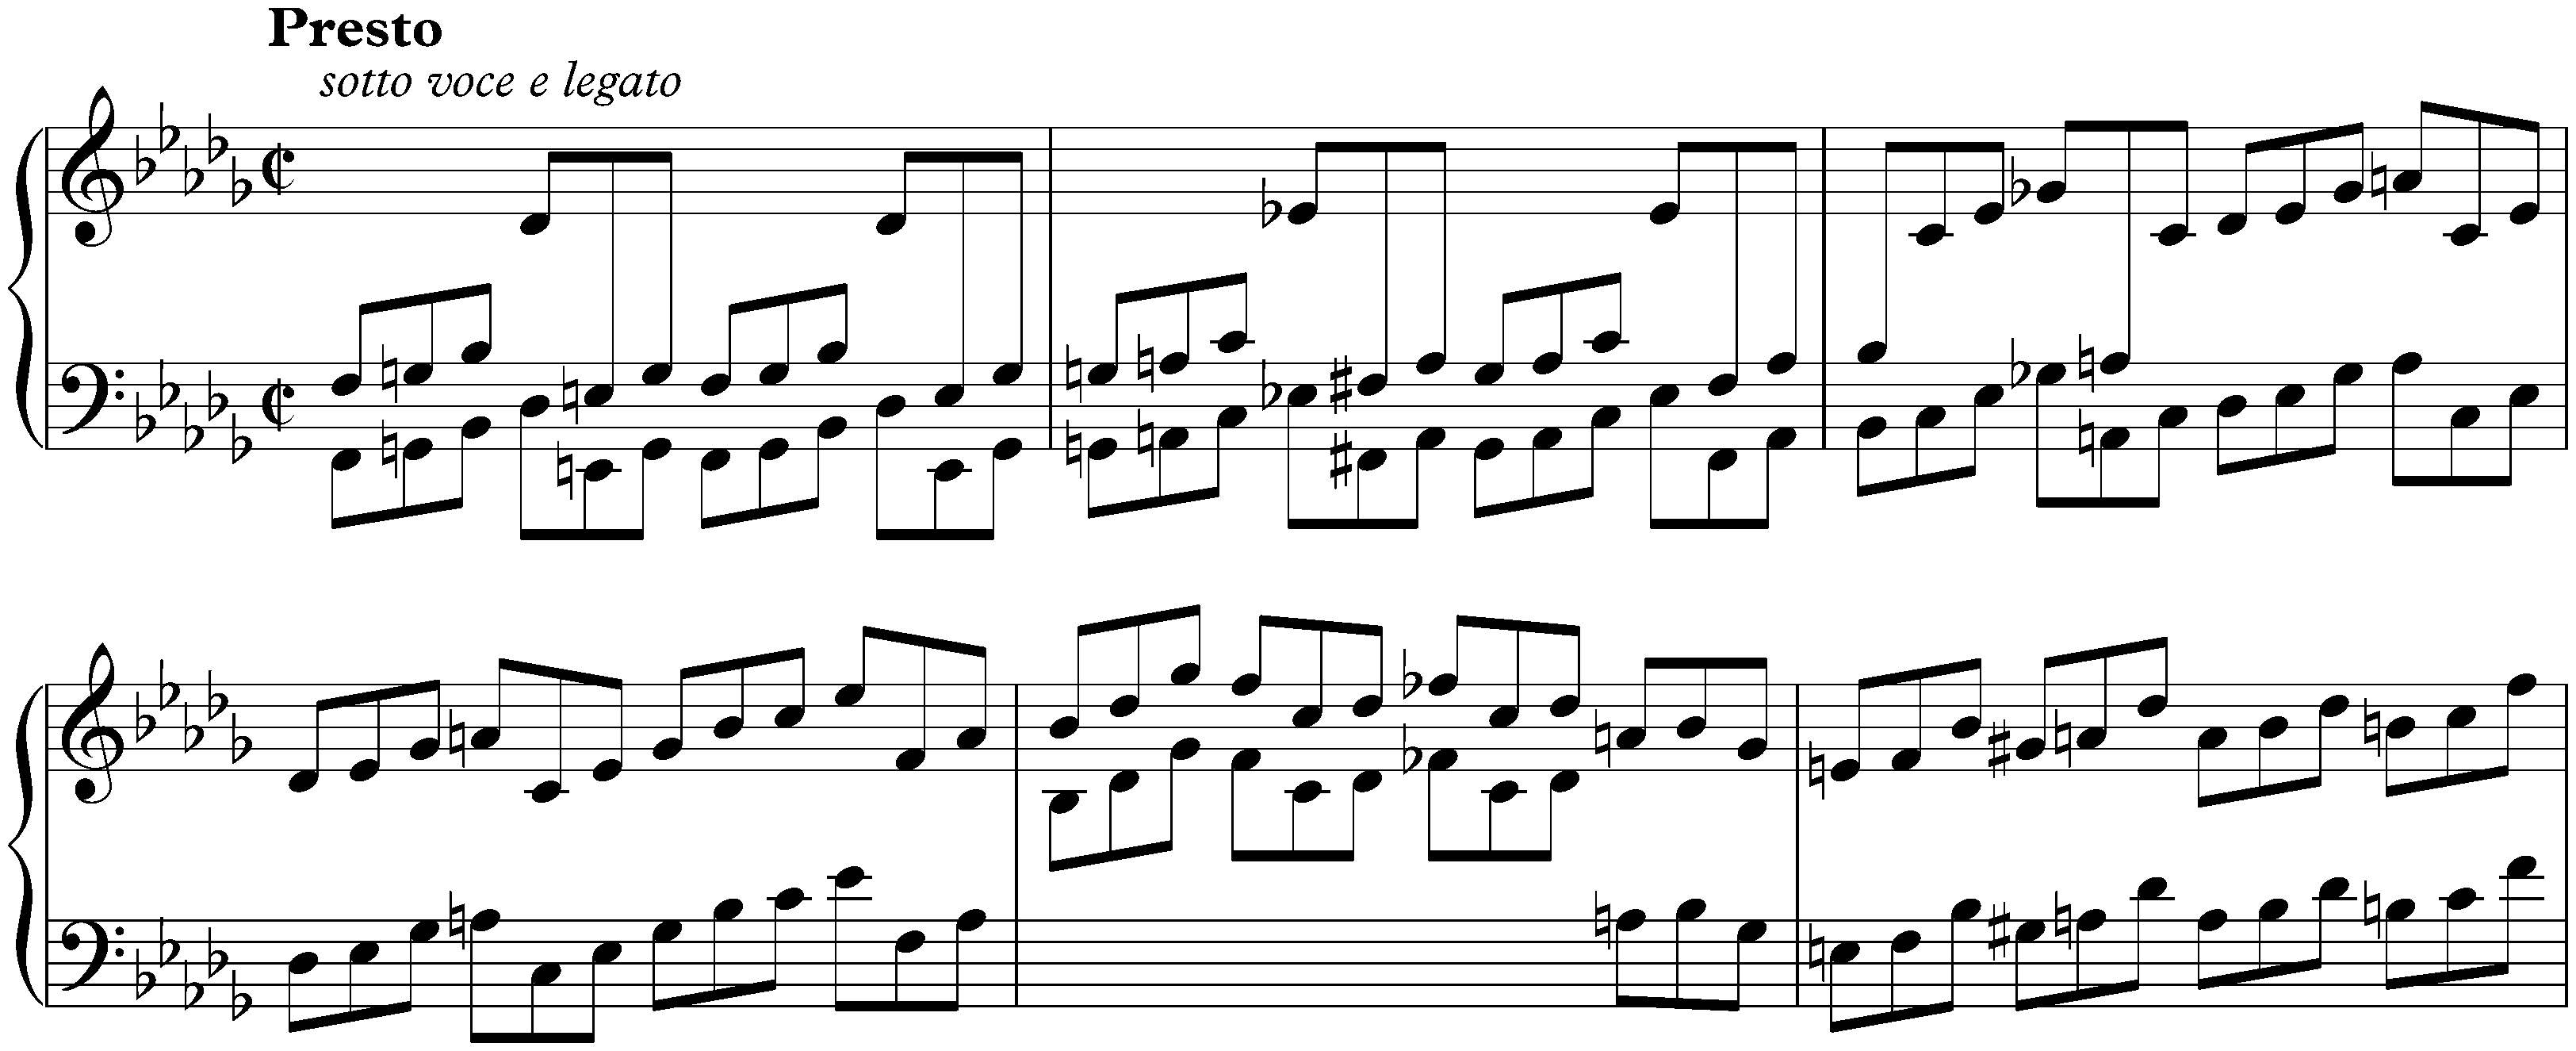 Sonata no. 2 in B-flat minor, op. 35; 4. Presto